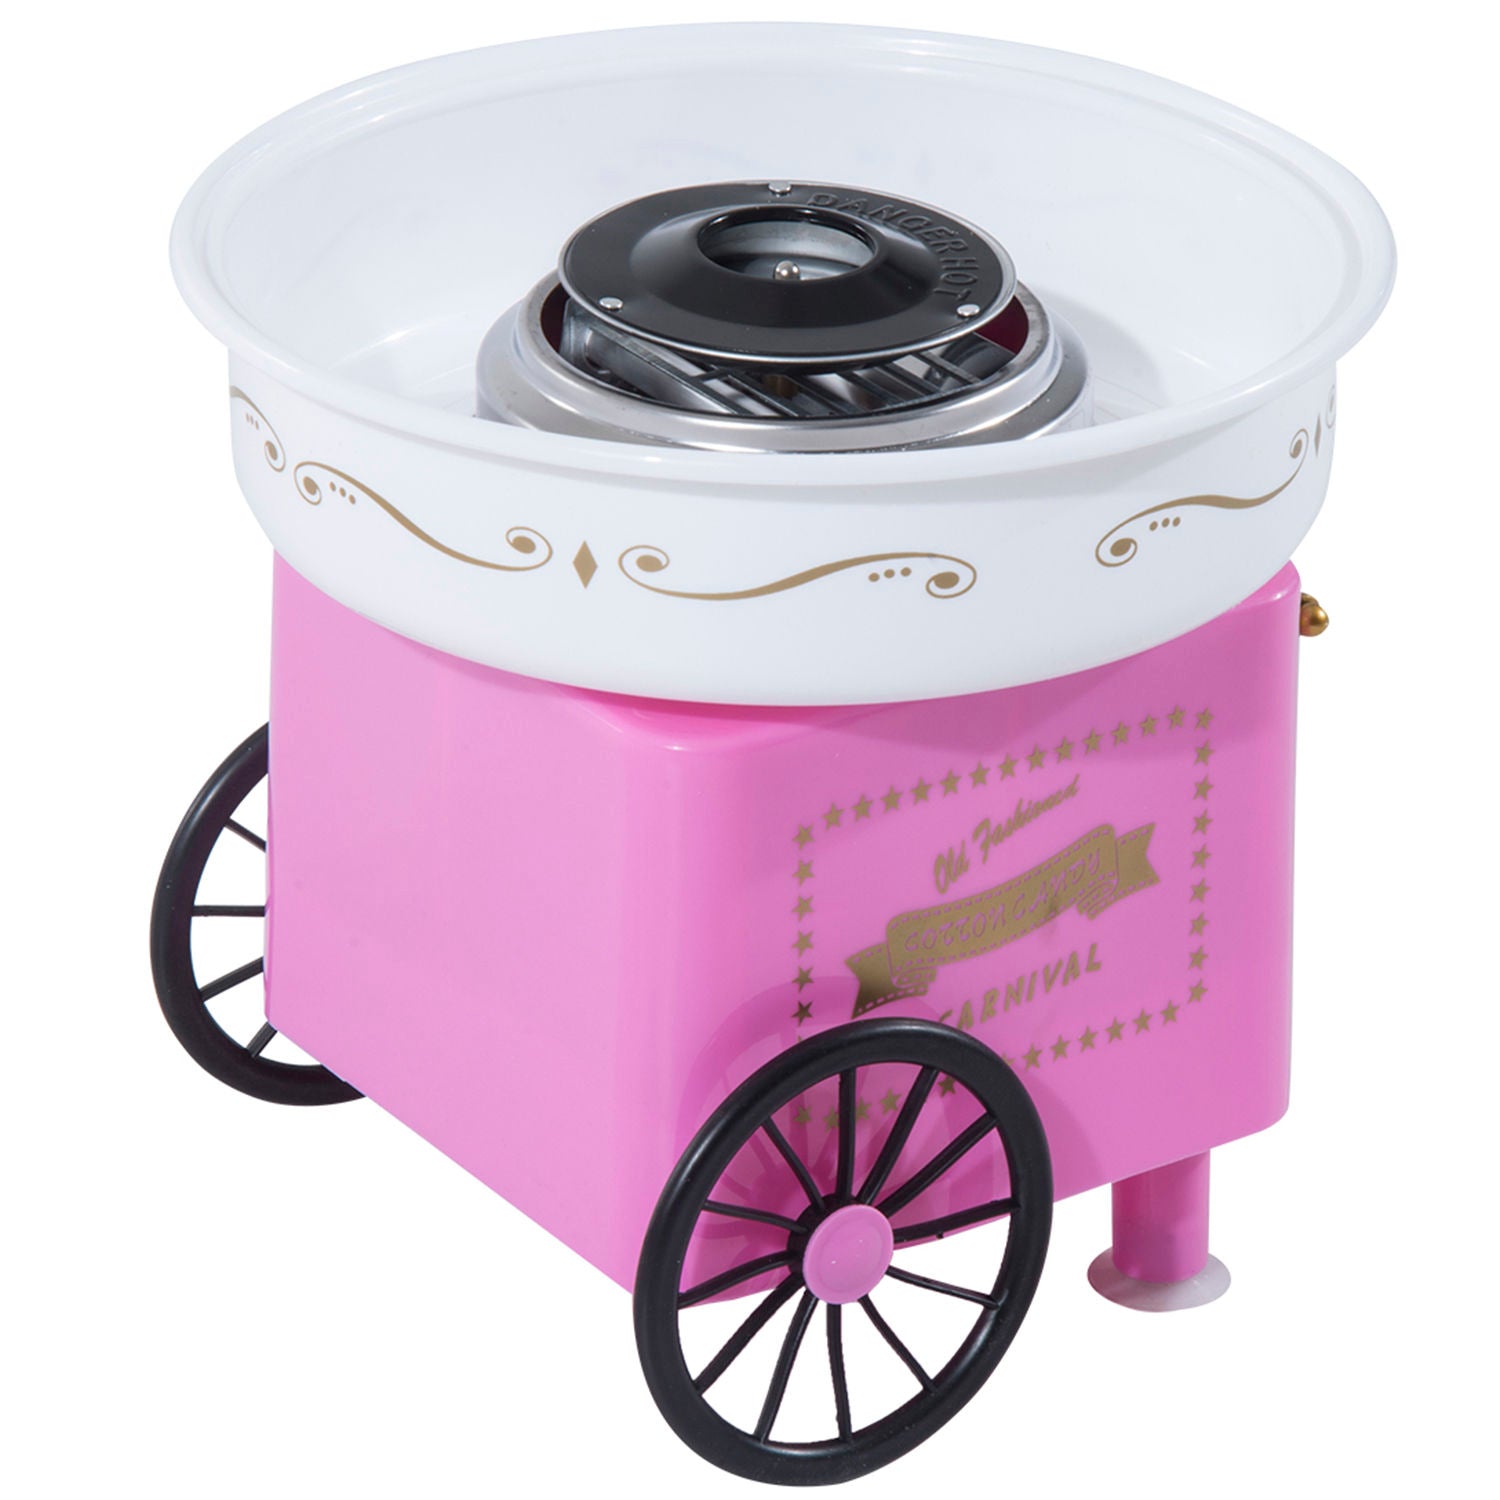 Nancy's Aster Pond Cotton Candy Machine - Pink - Iron, Aluminum, Pp - 11.81 cm x 11.81 cm x 11.02 cm